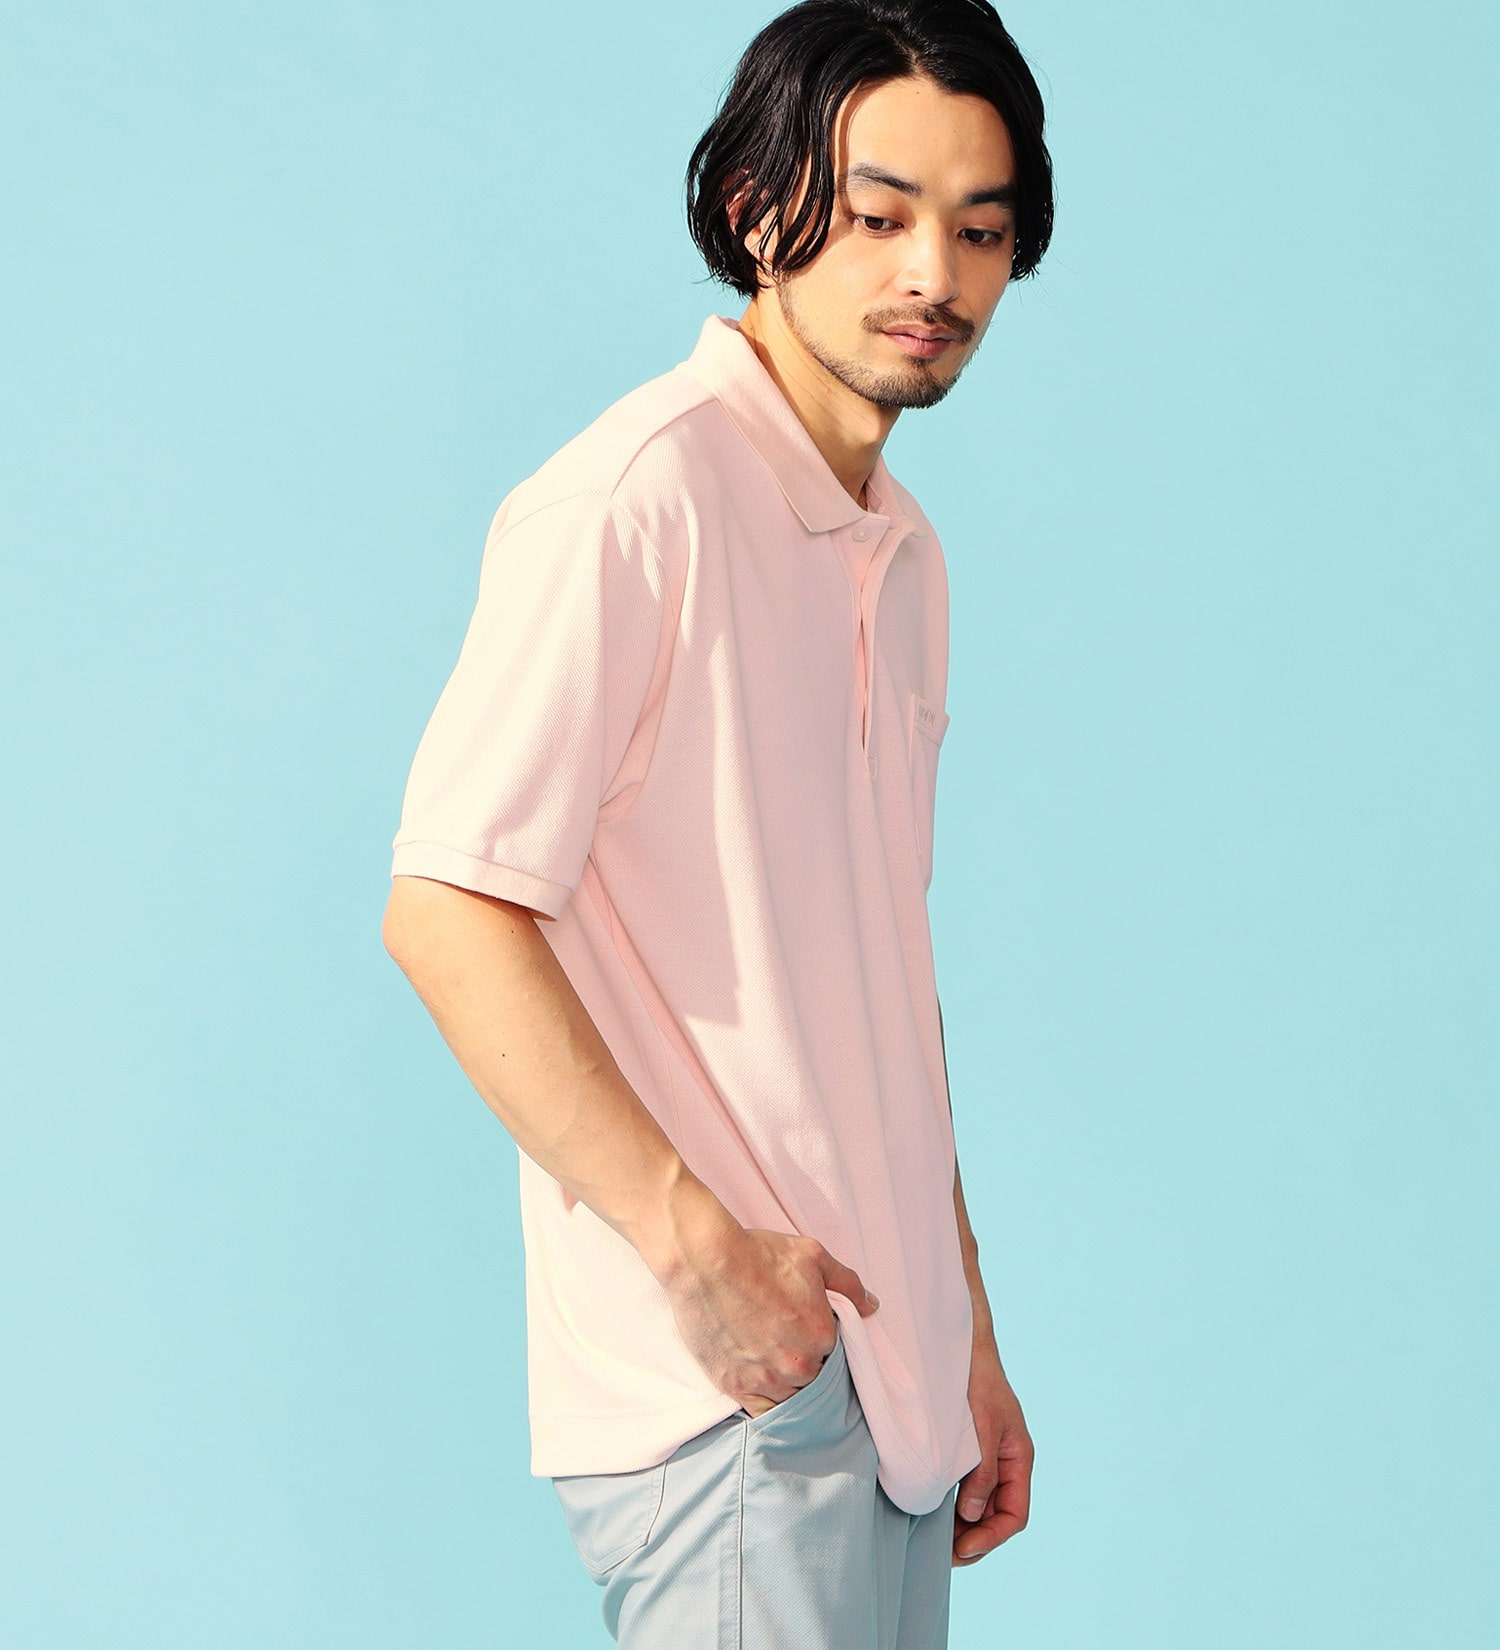 EDWIN(エドウイン)のCOOL FLEX レイシールド ポロシャツ 半袖|トップス/ポロシャツ/メンズ|ピンク